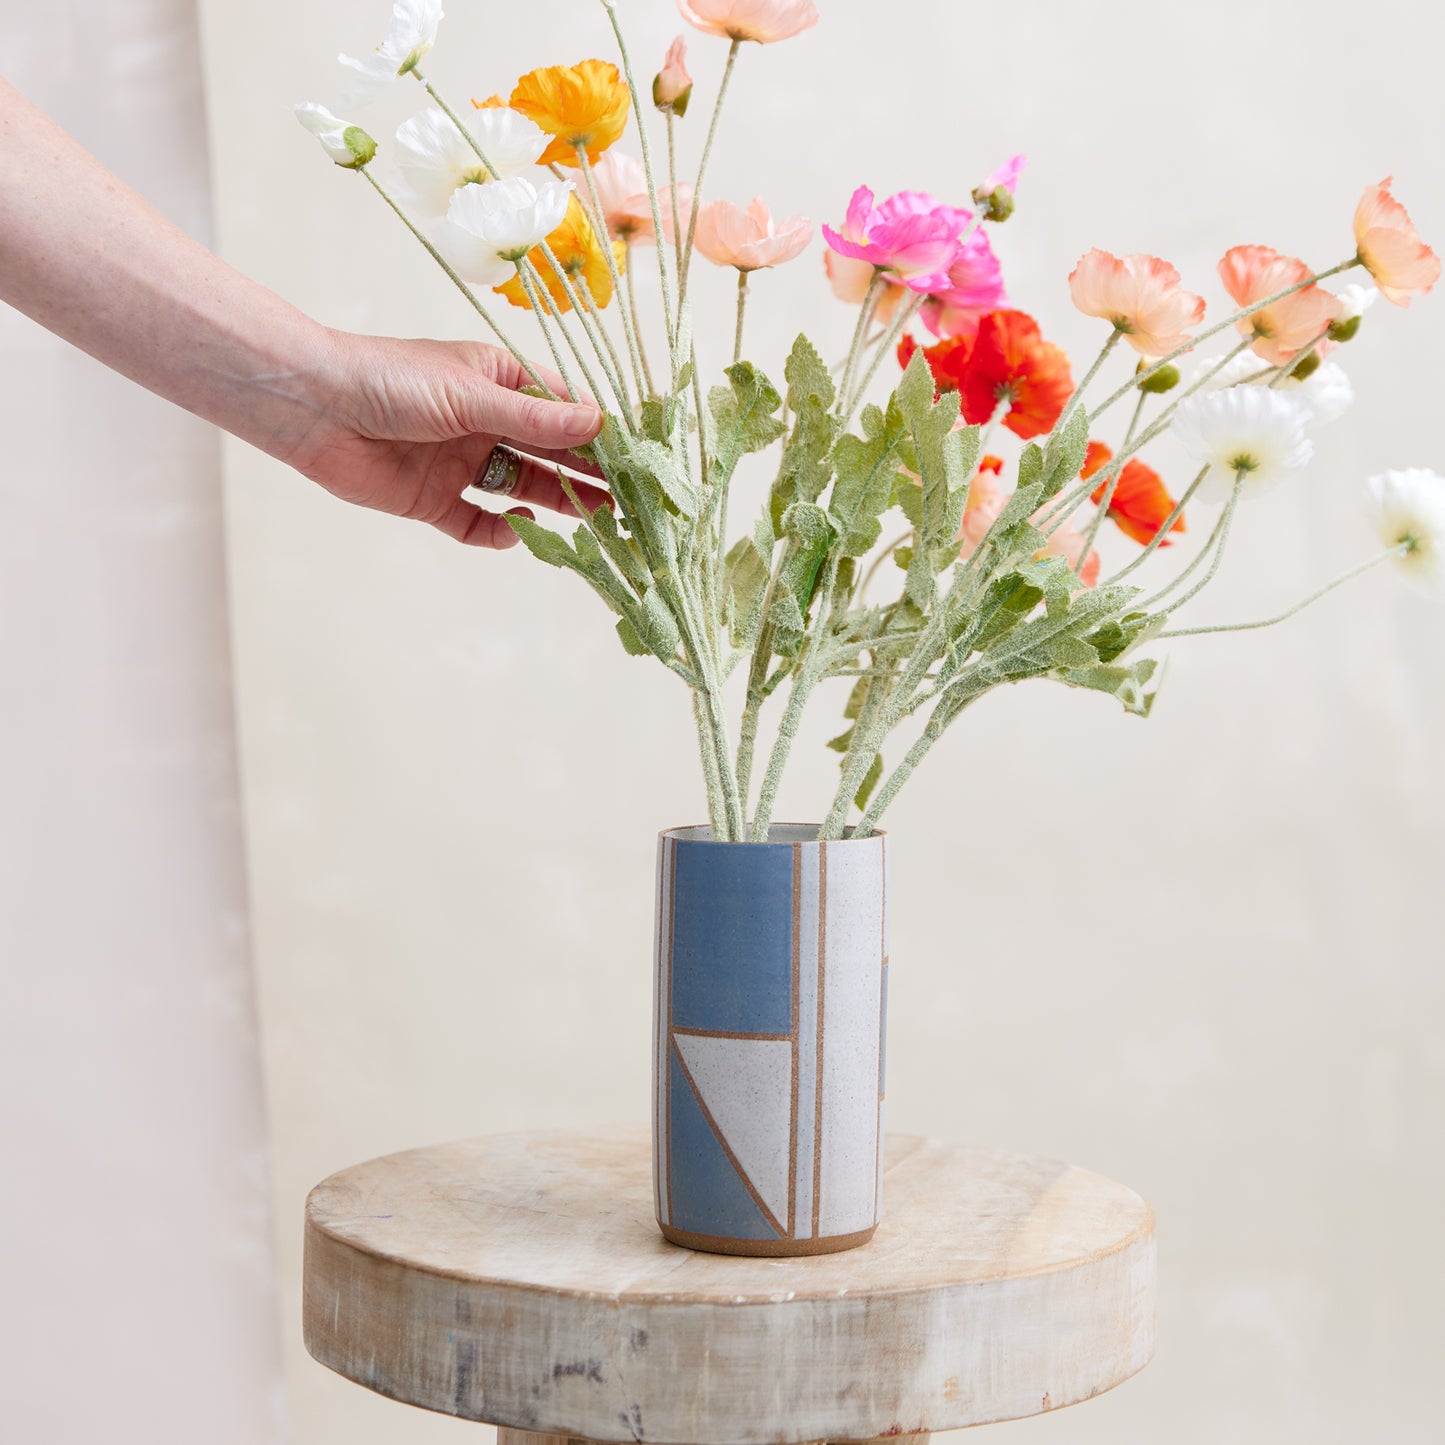 Geometric Cylindrical Handmade Ceramic Vase - Dark Blue and Grey